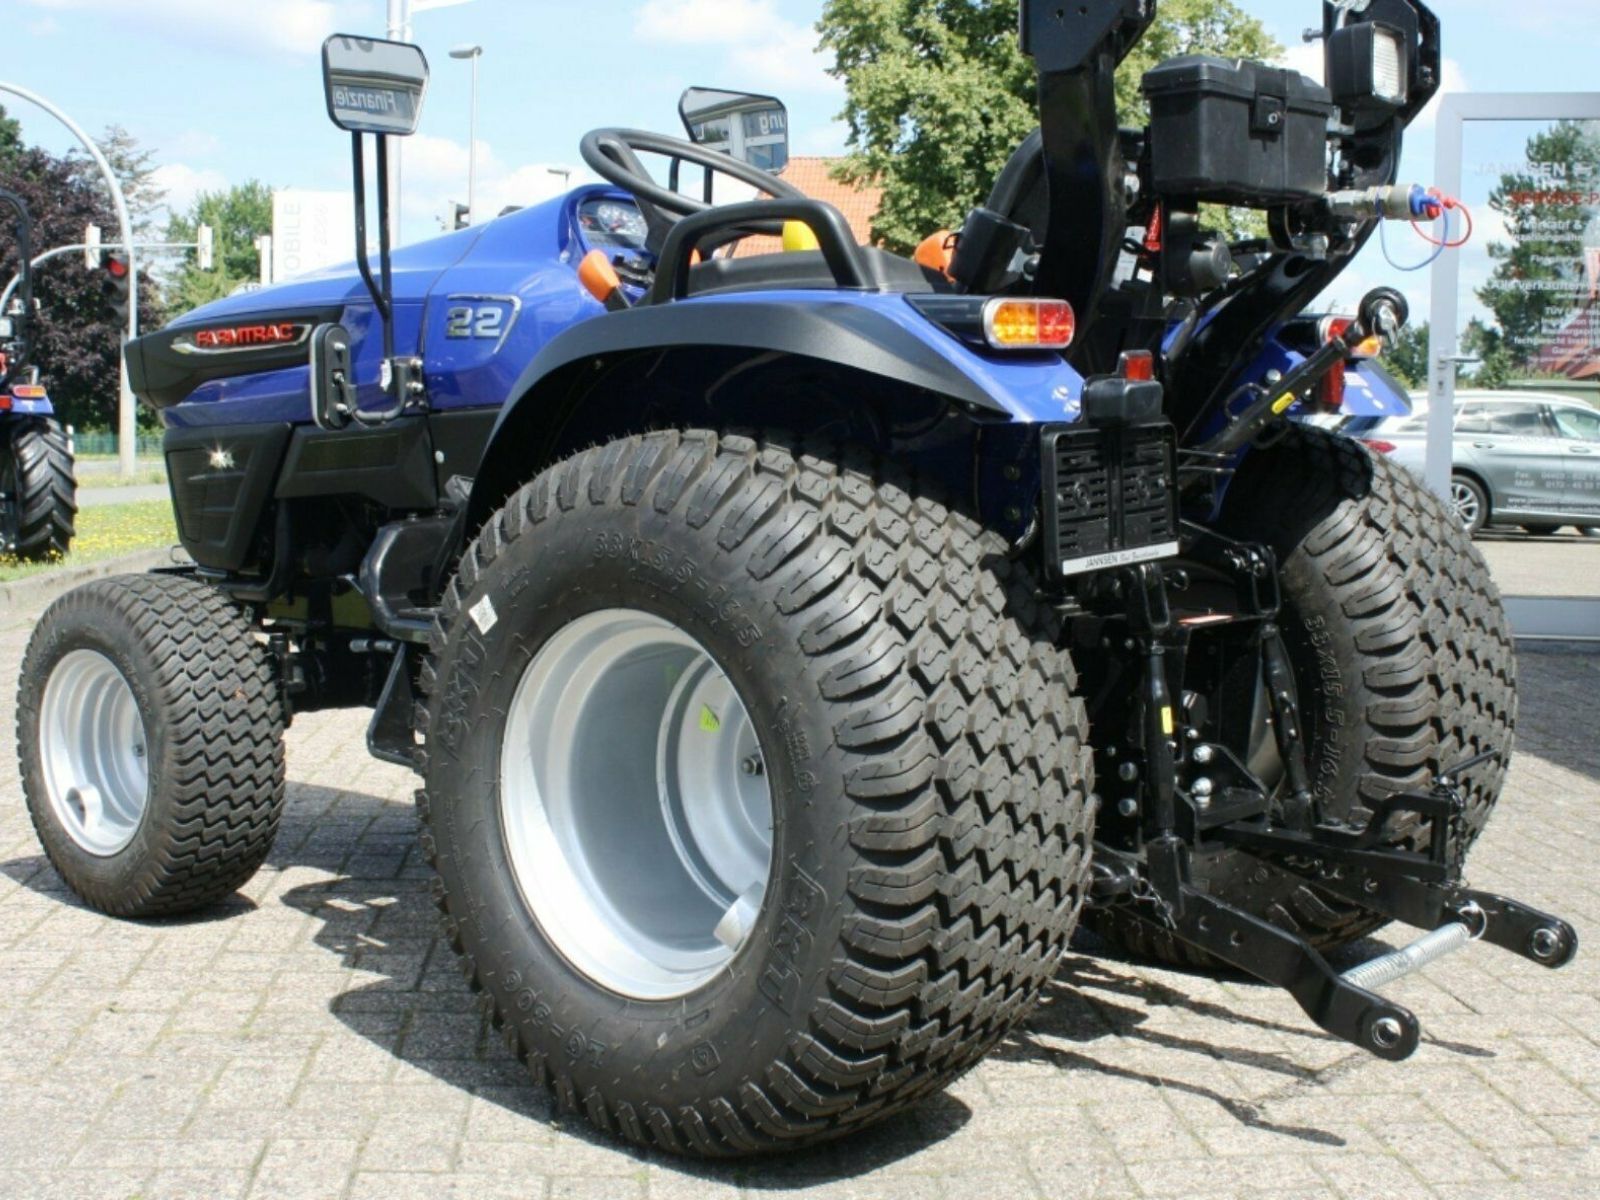 Jannsen_Automobile_Landmaschinen_Farmtrac22_Traktor_Rasenbereifung-06